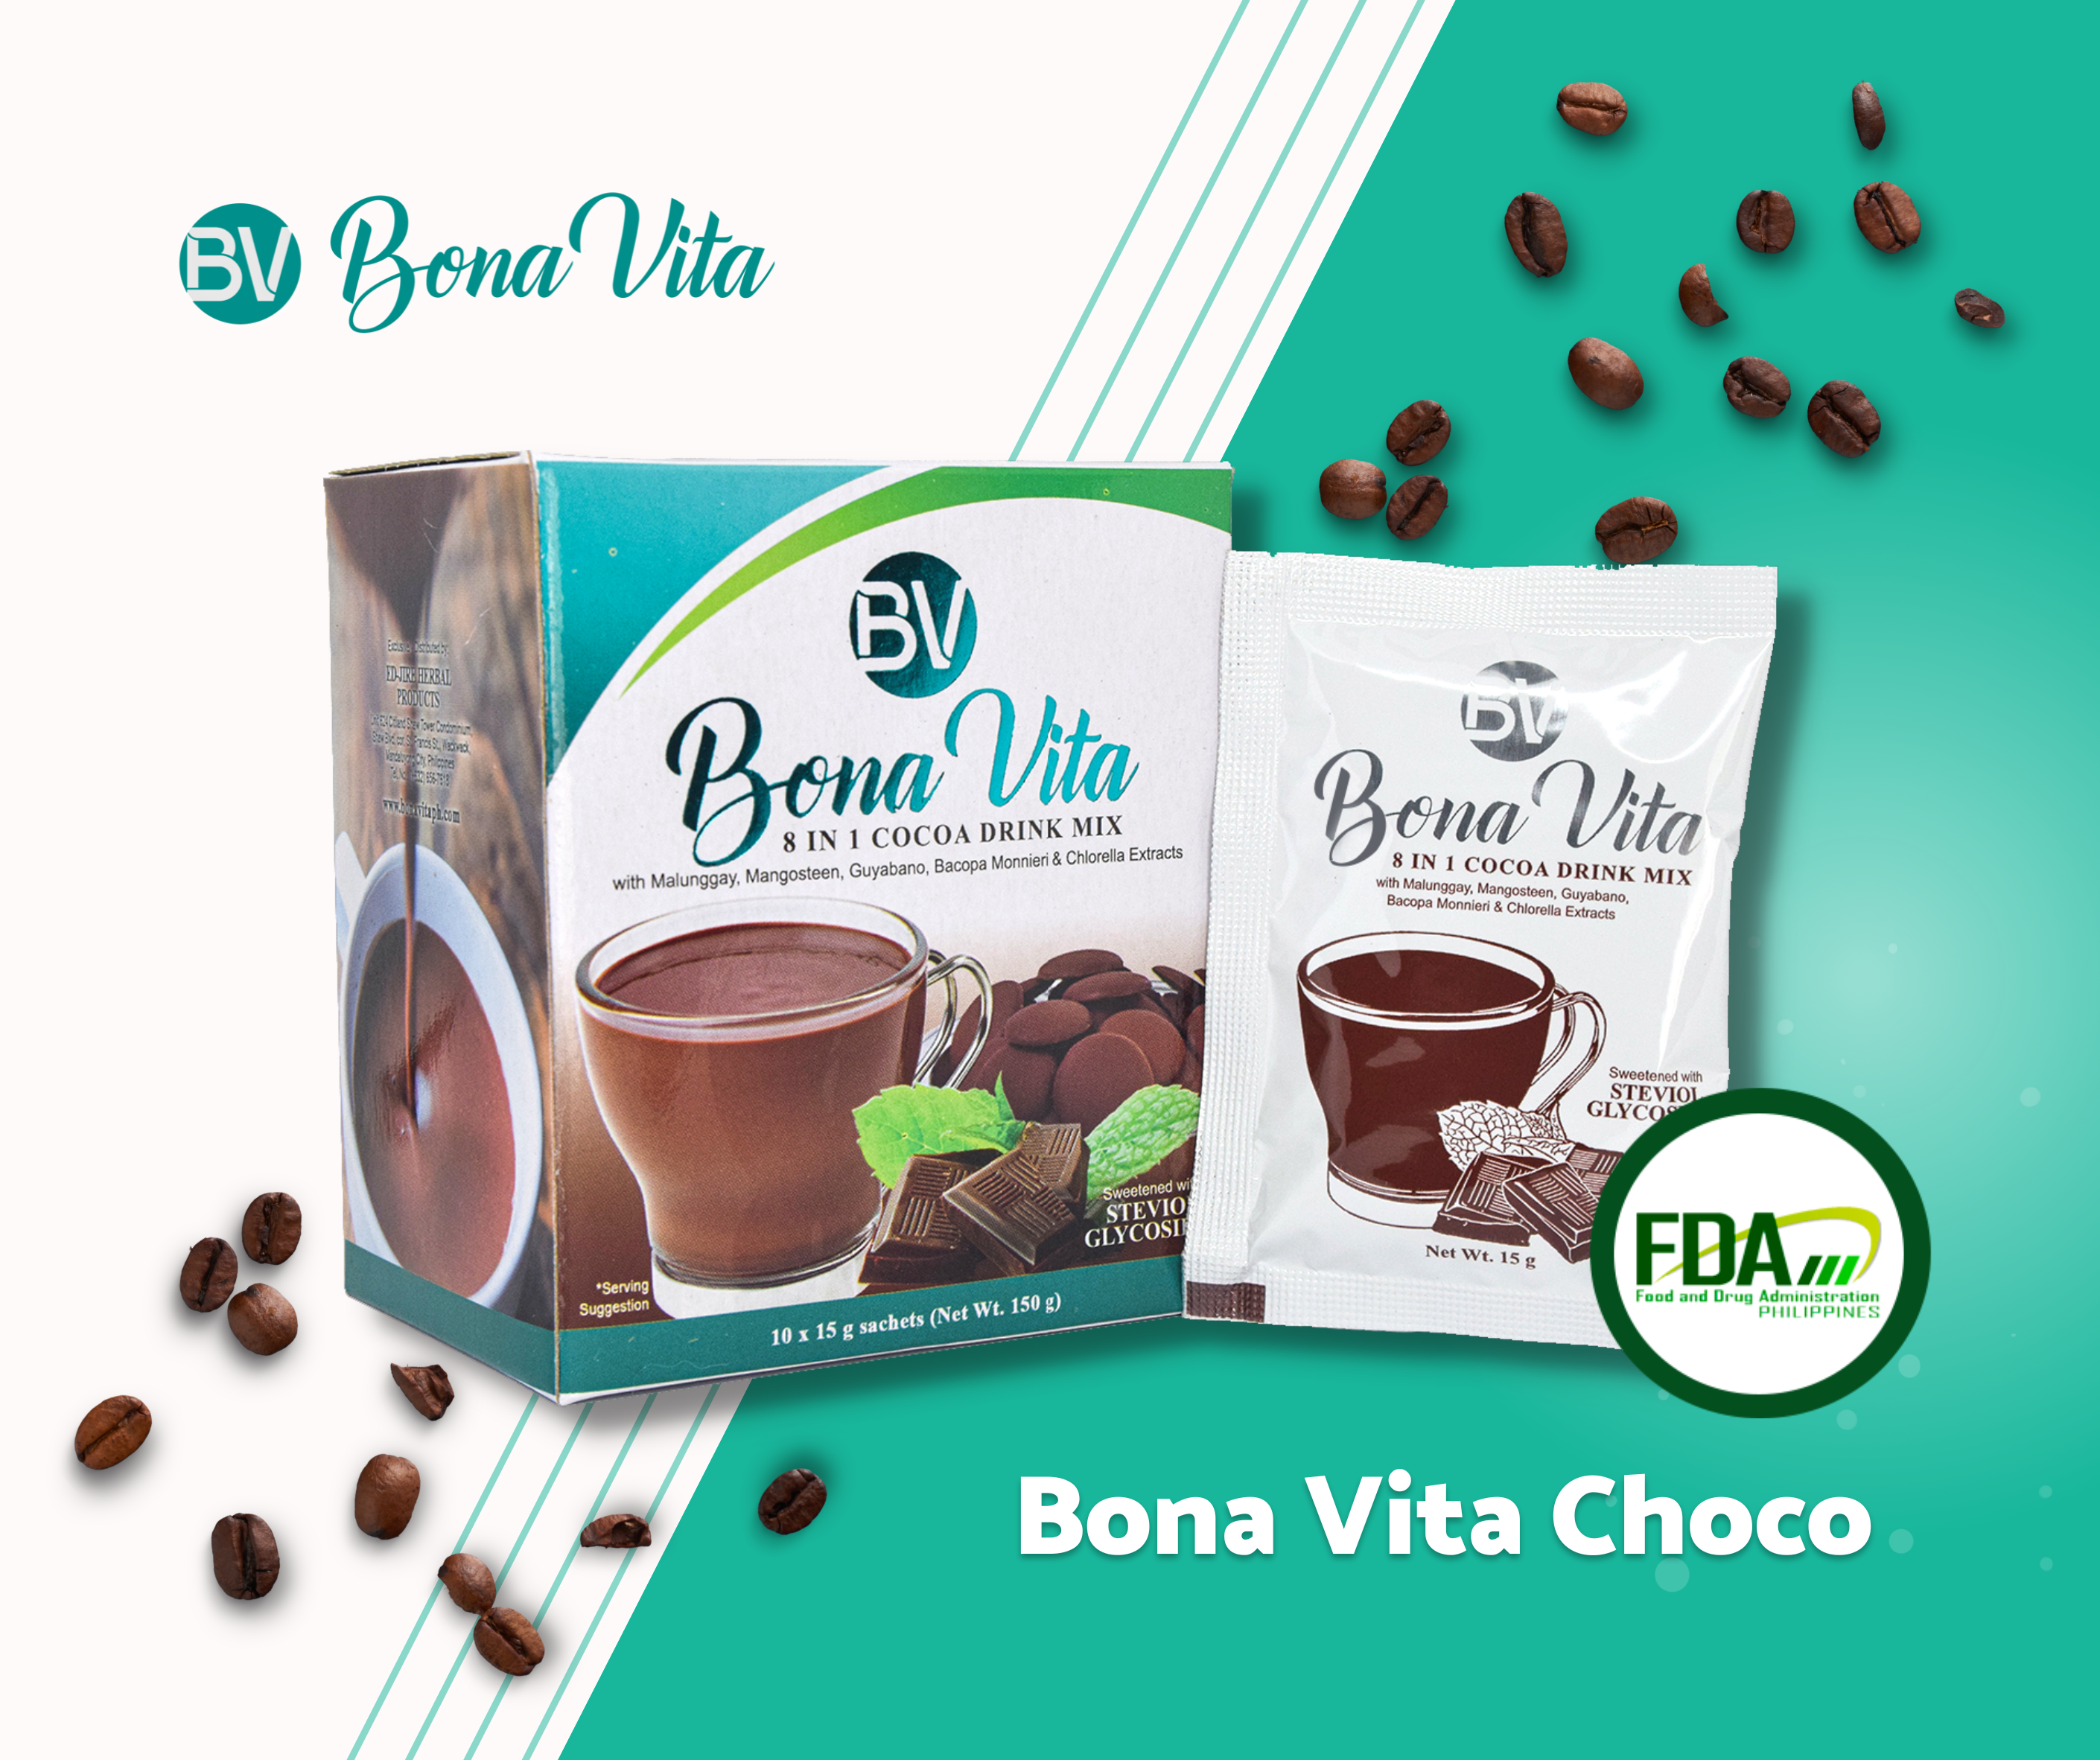 What other ingredients does Bona Vita’s BonaSlim have?